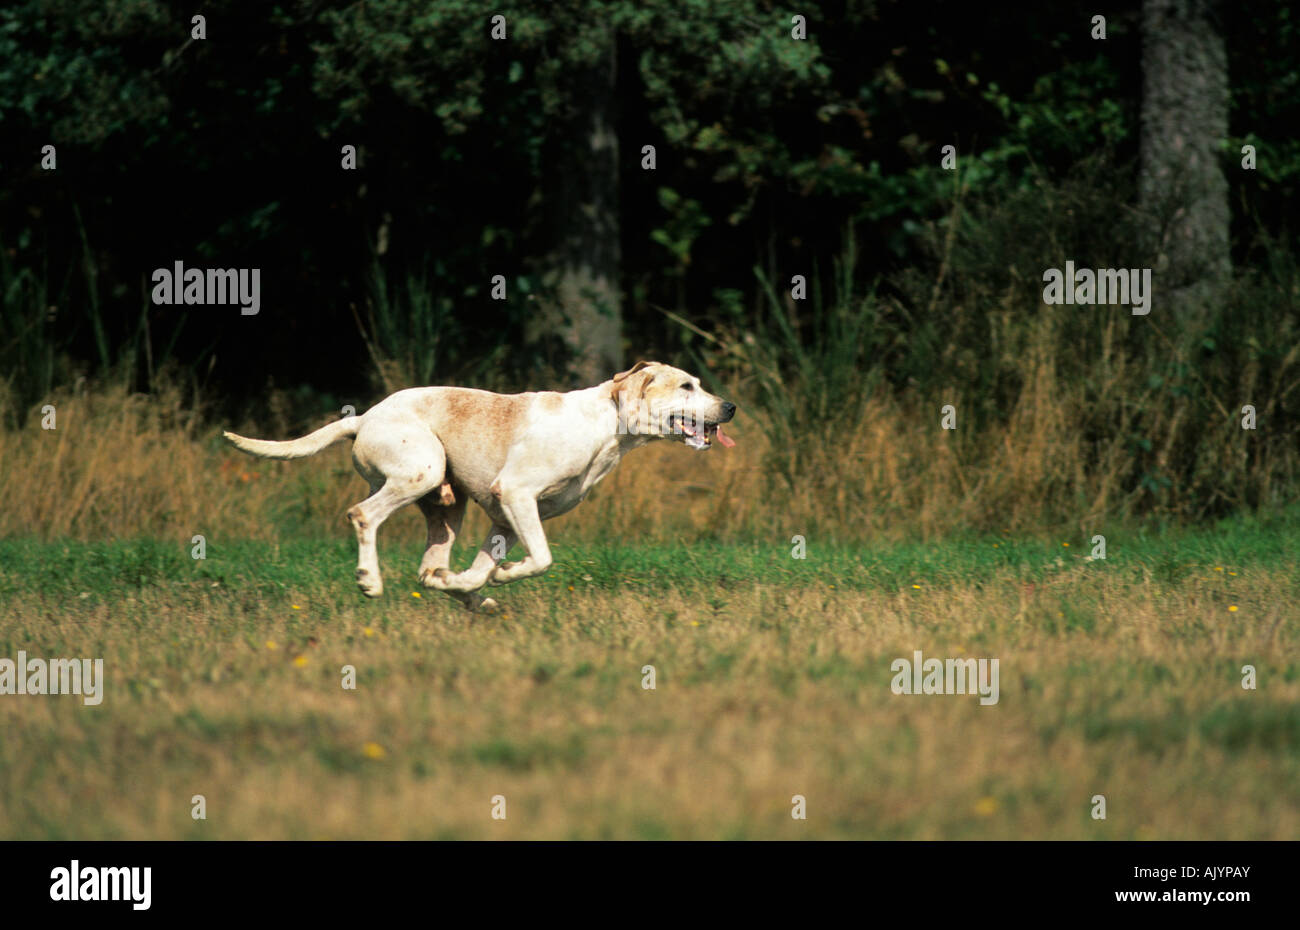 Beagle laufend | beagle running Stock Photo